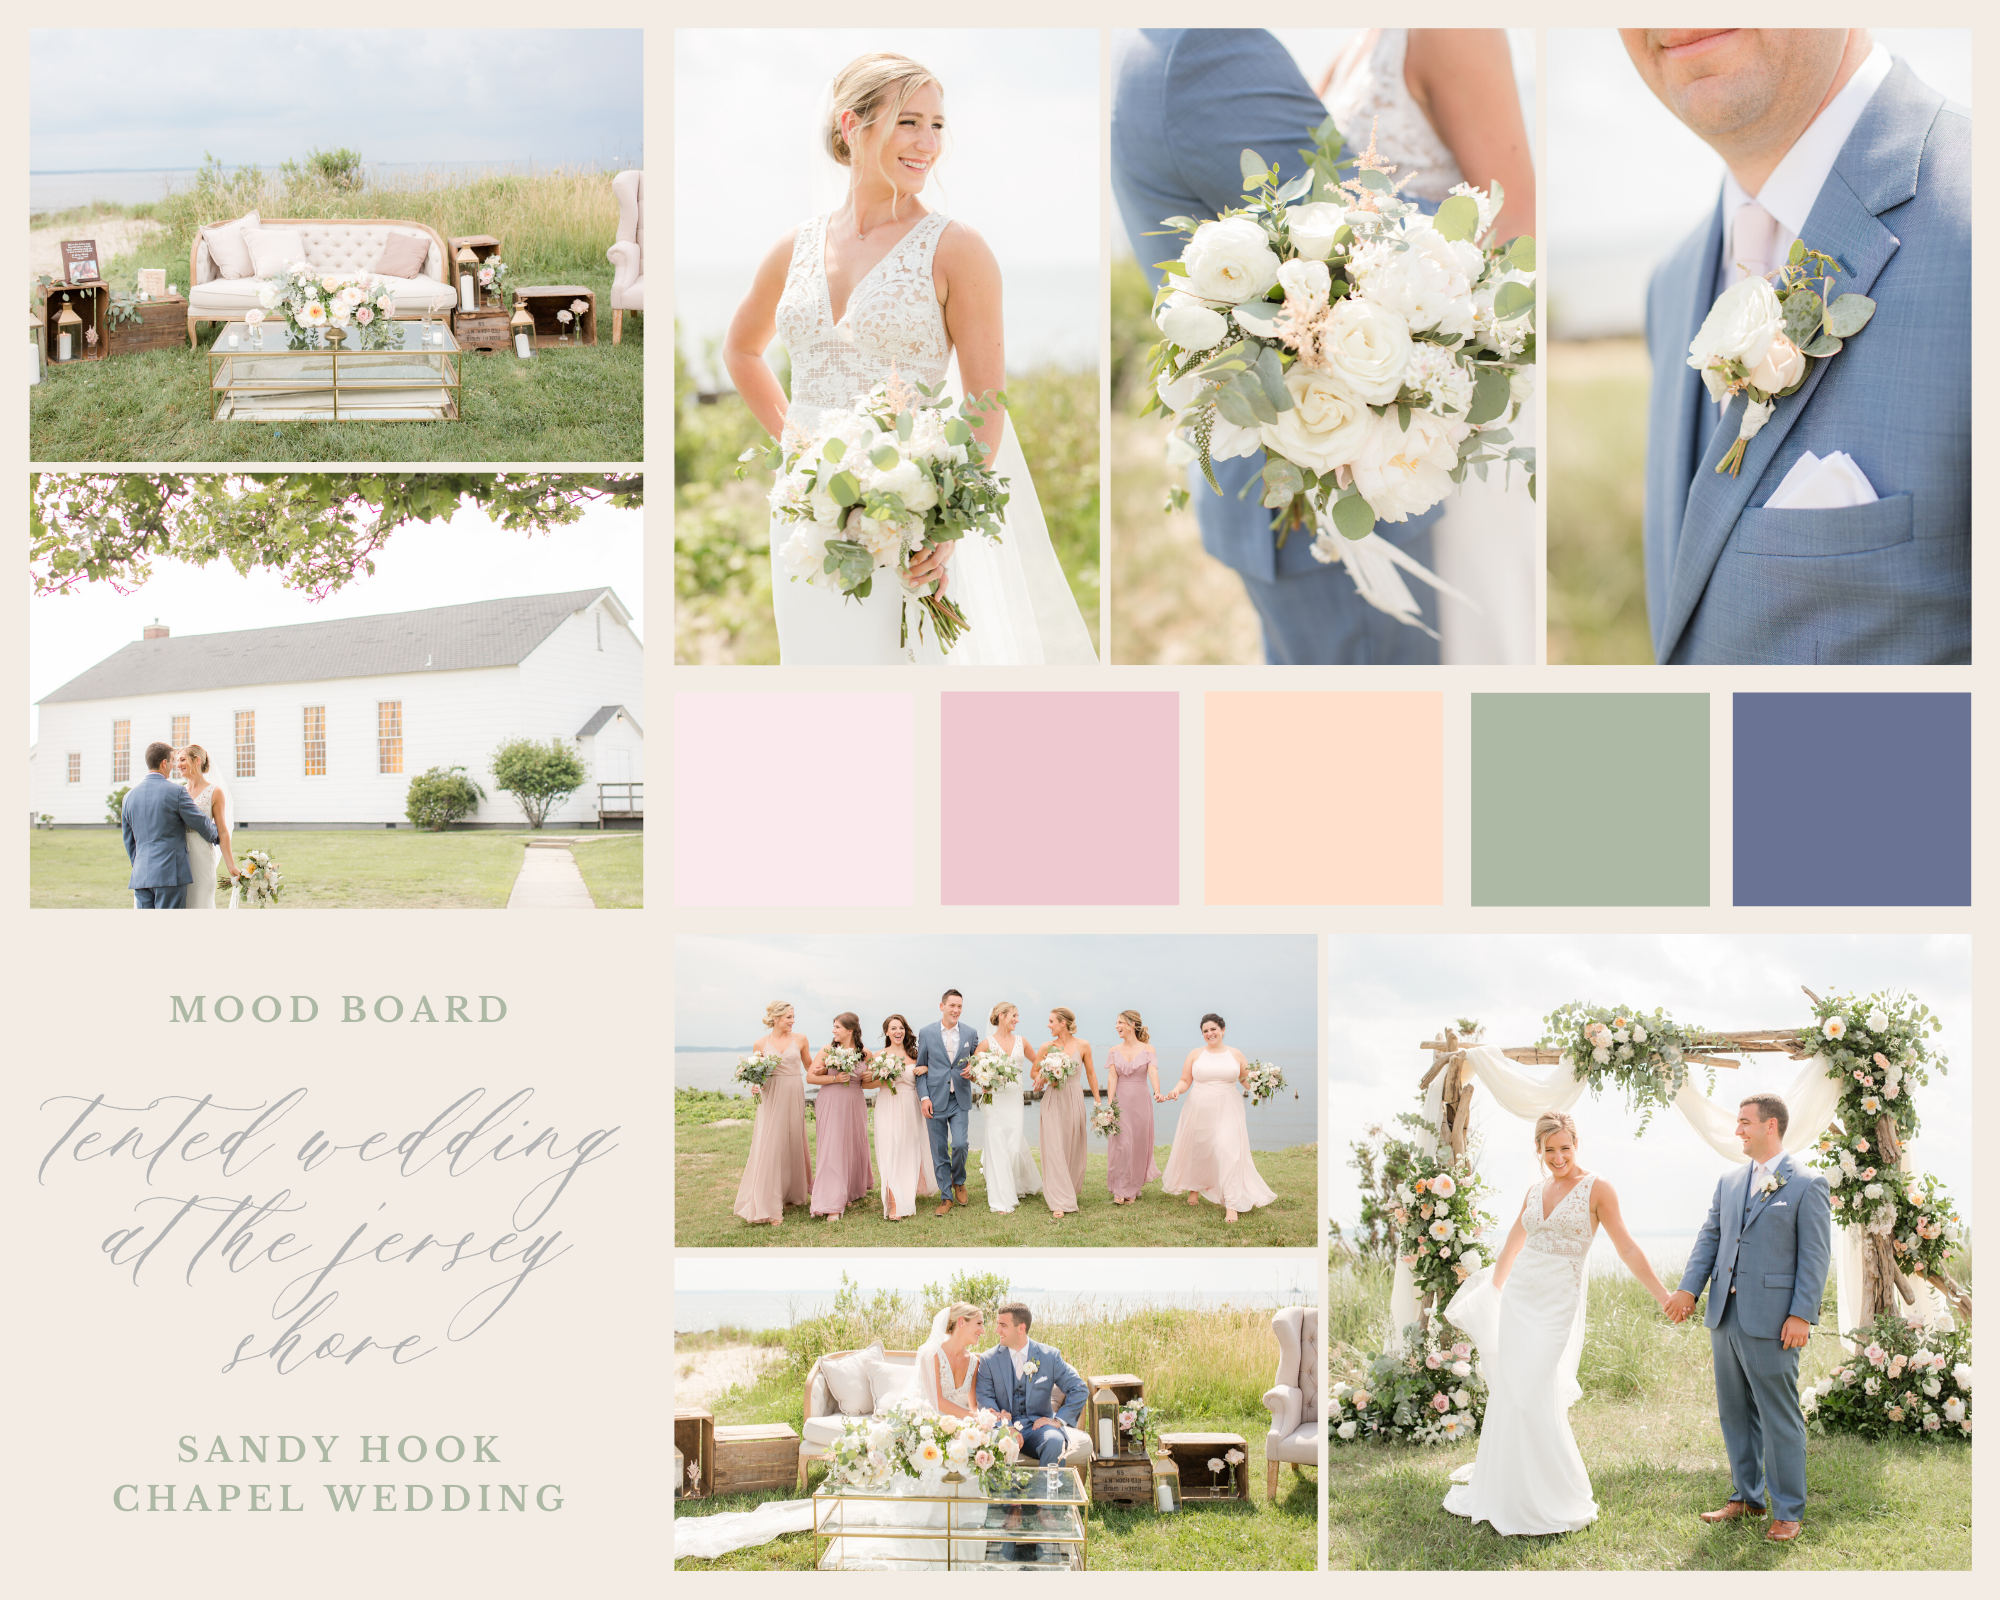 Sandy Hook Chapel Wedding Mood Board